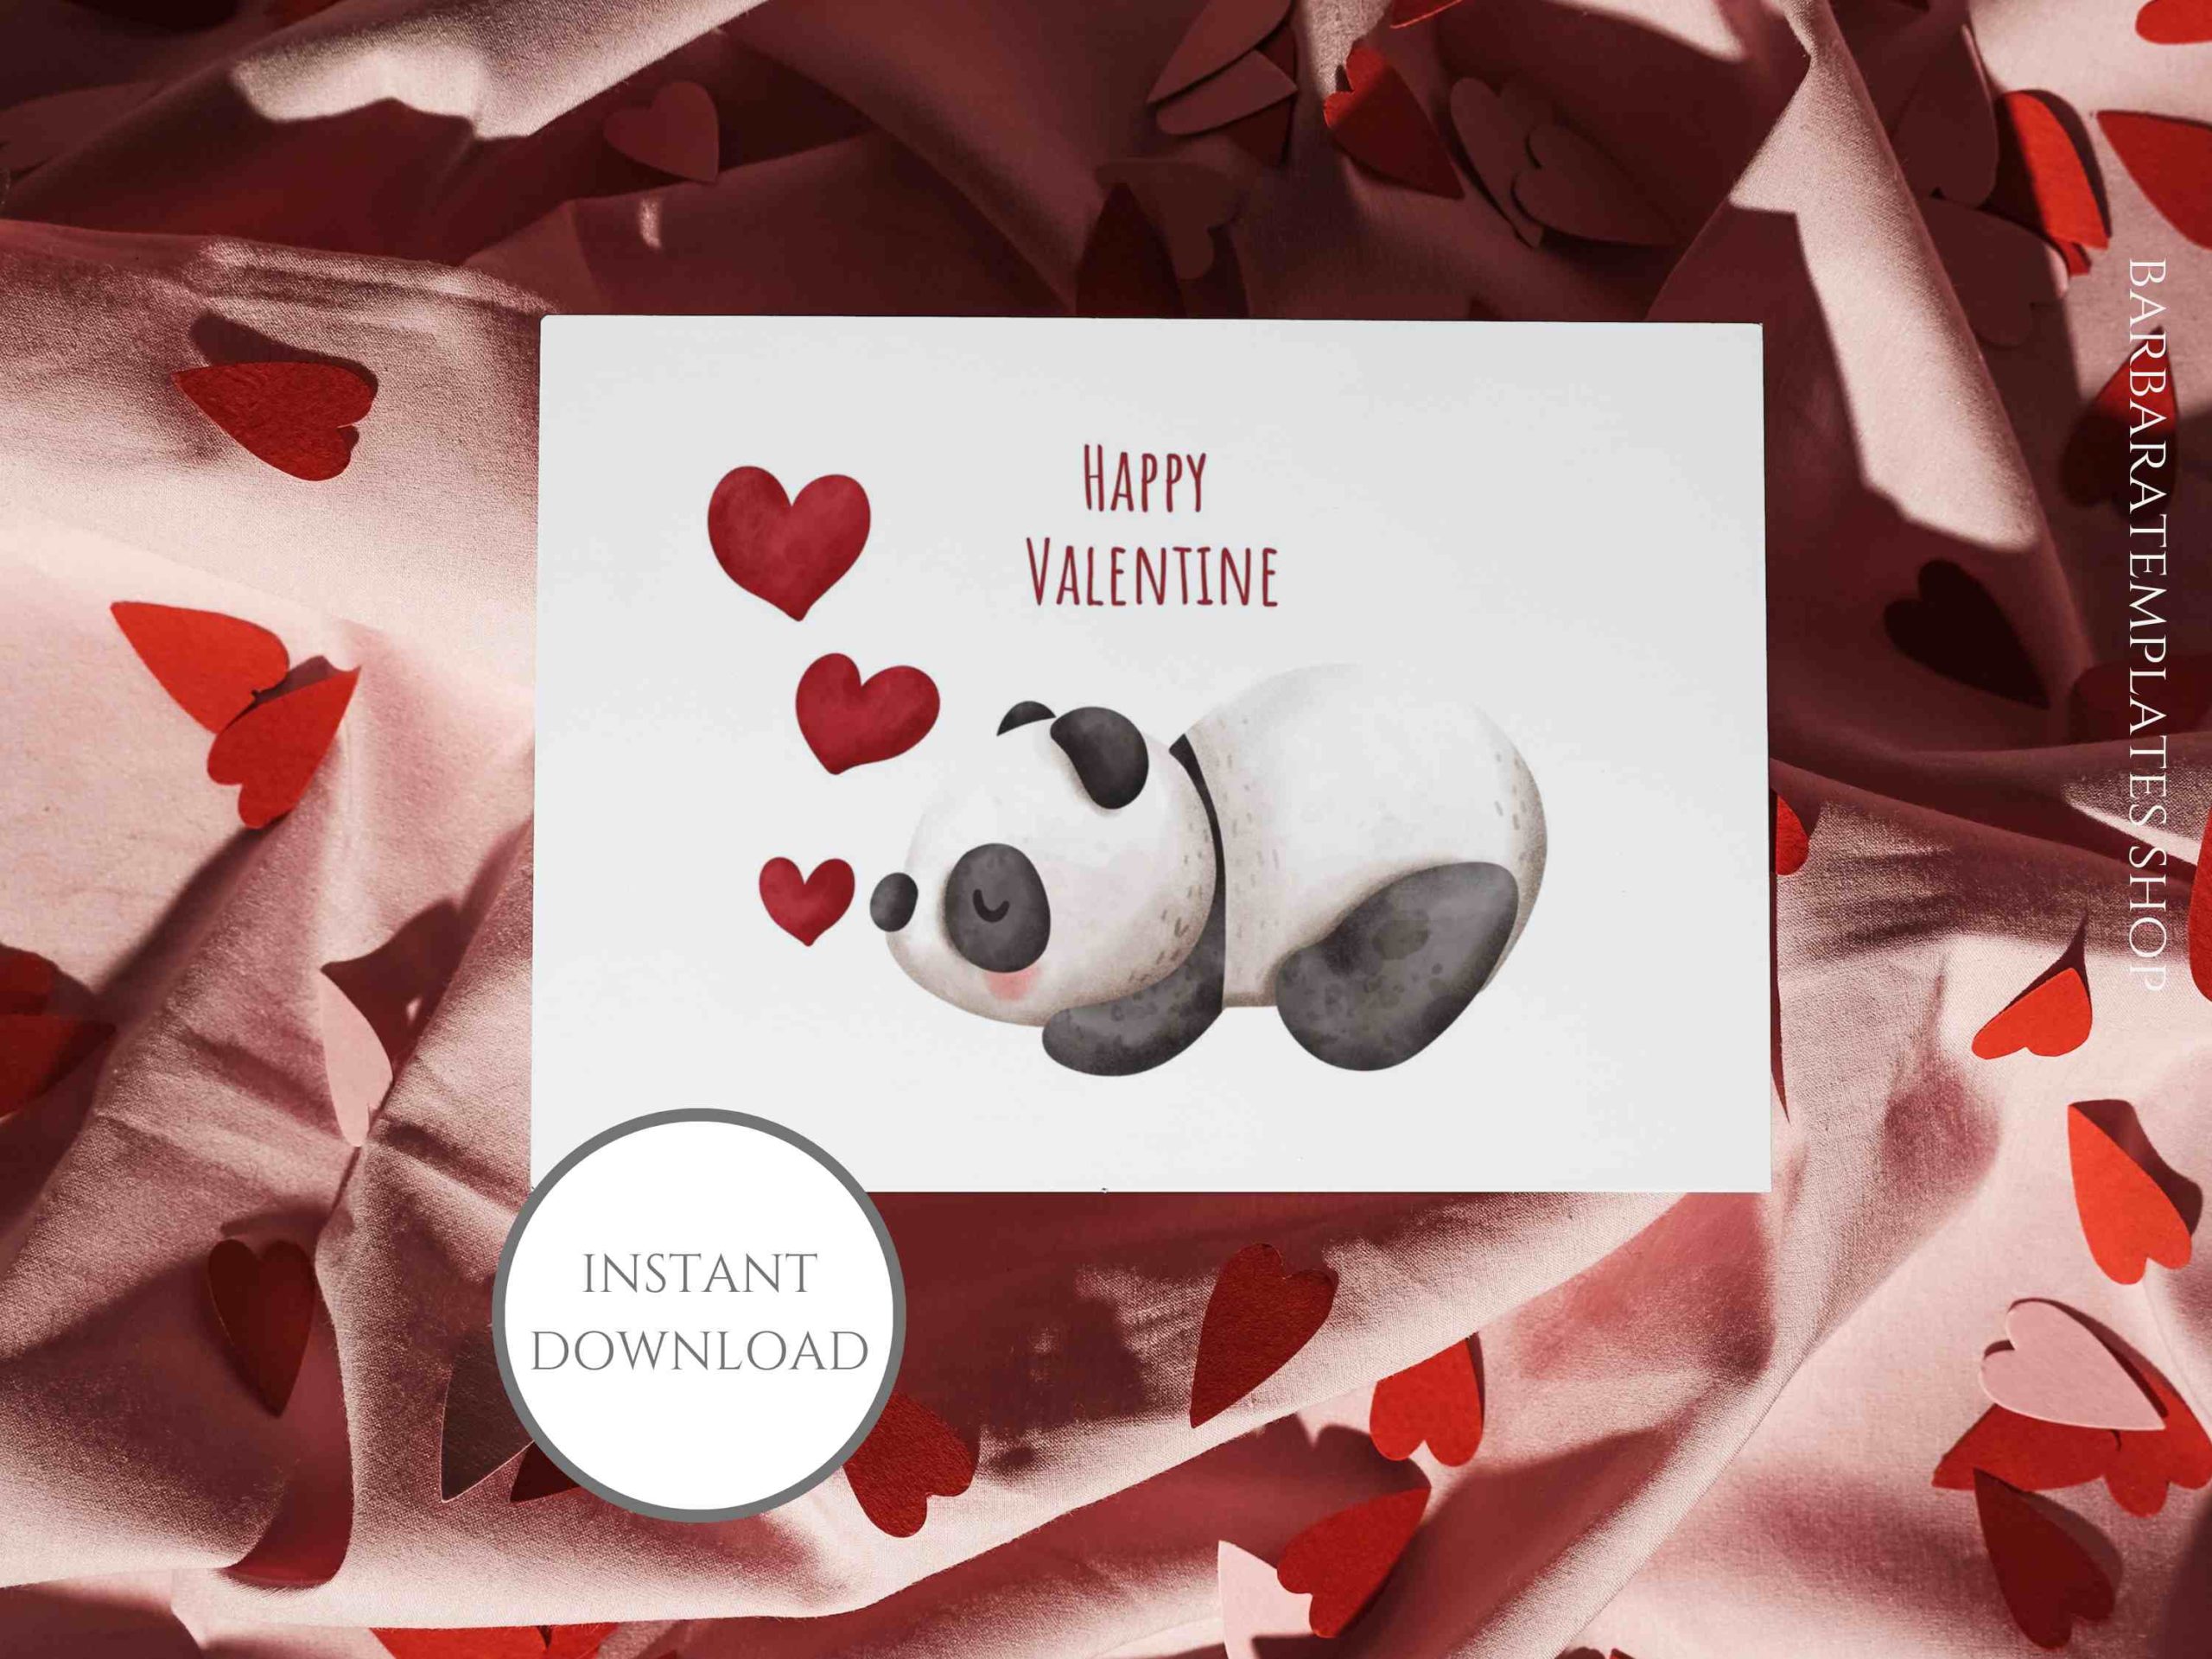 Happy Valentine Panda Printable Valentine Card